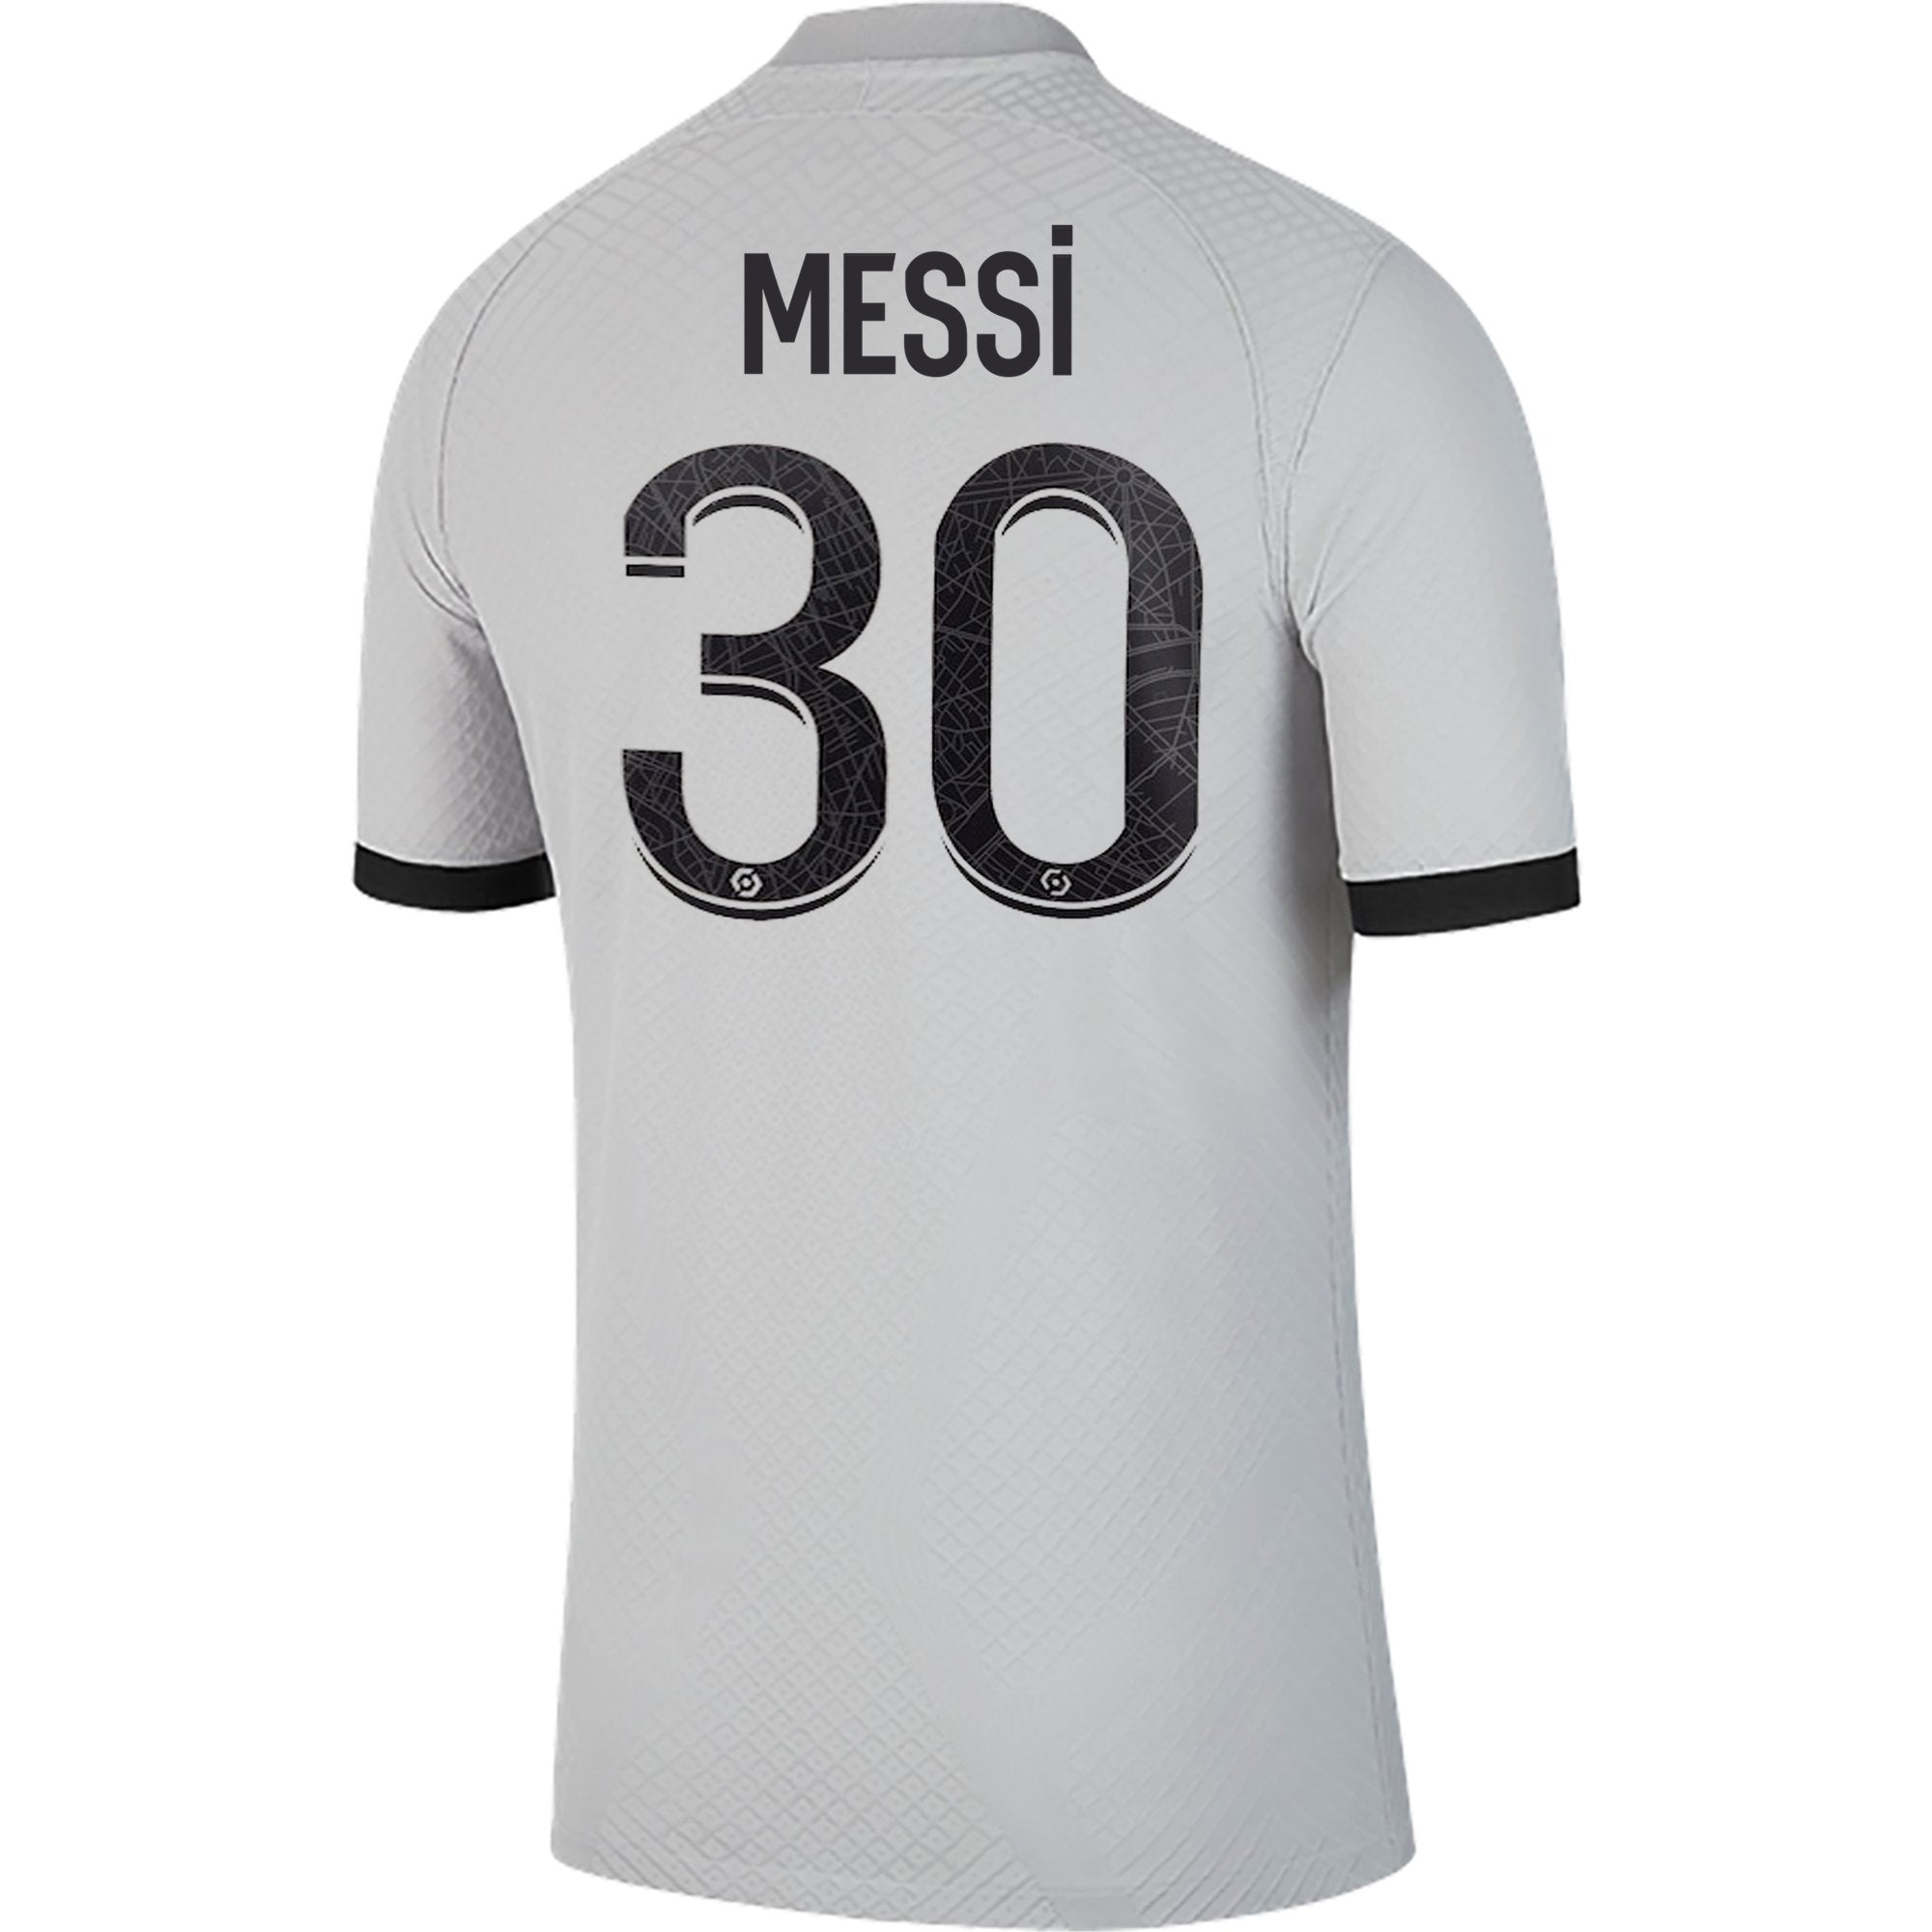 Nike Youth Paris Saint-Germain Stadium Away 2022/23 with Messi 30 printing